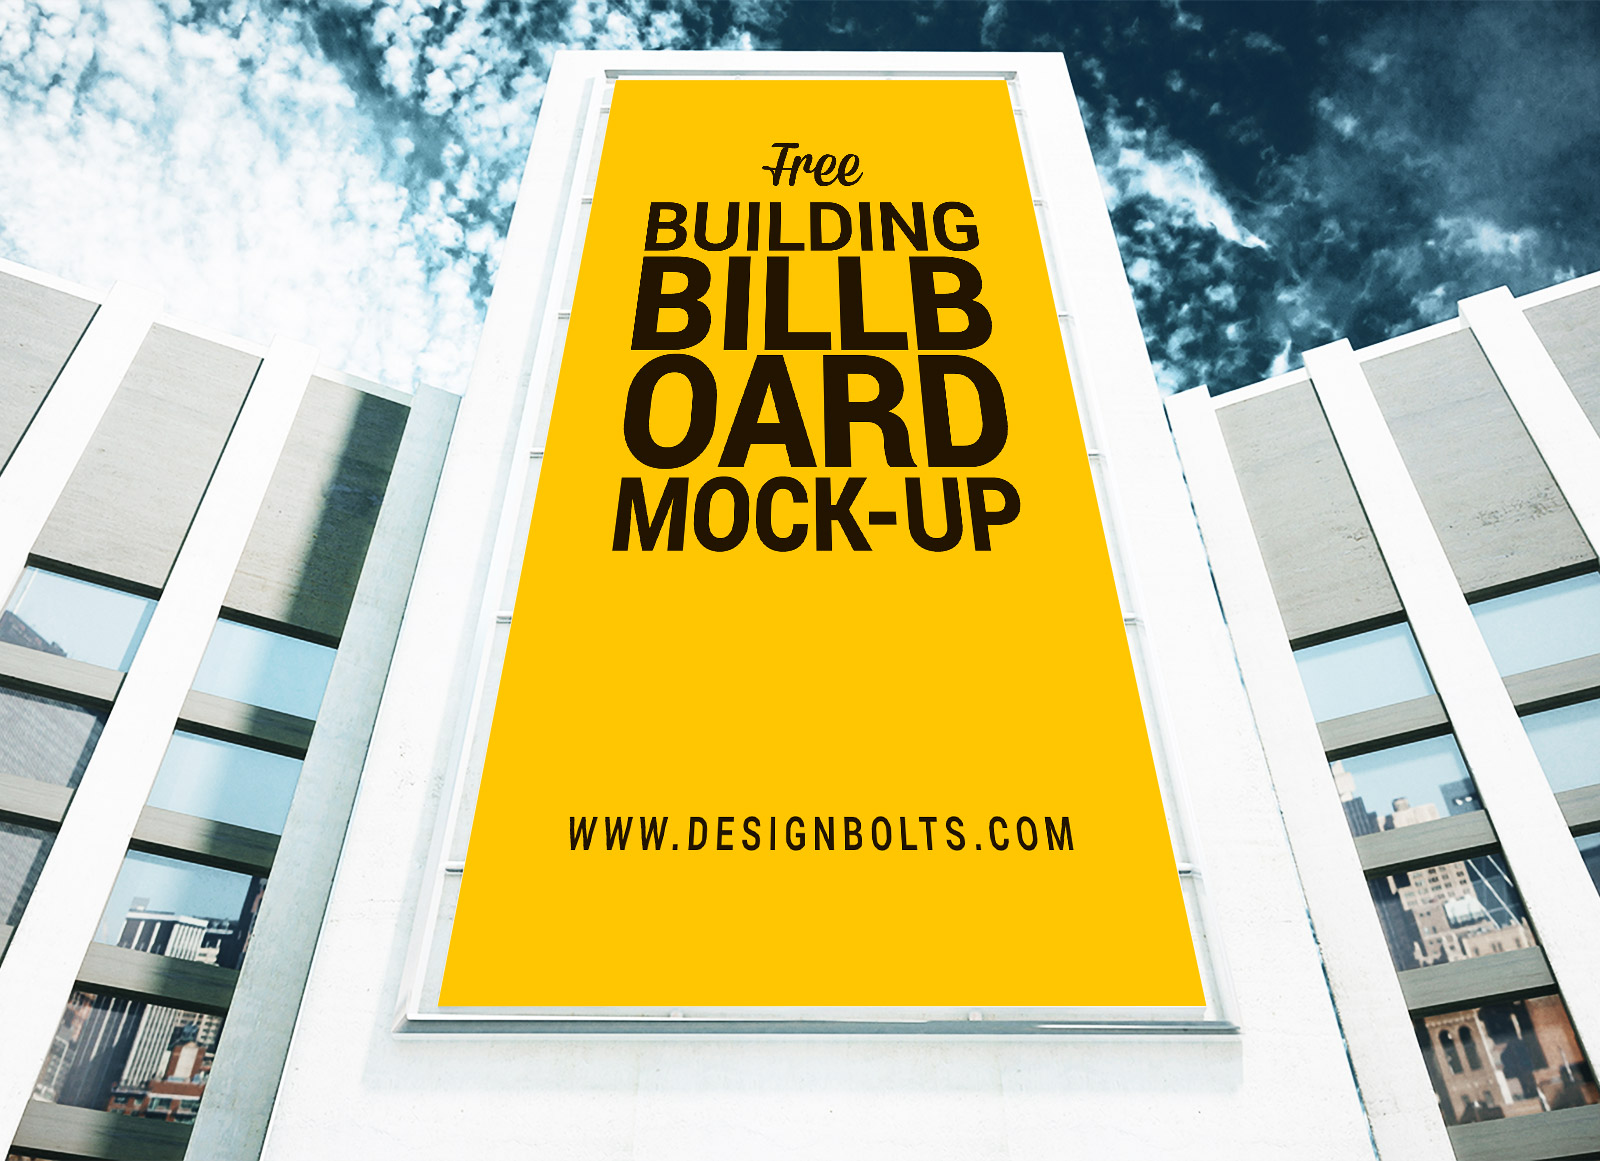 Free-Outdoor-Building-Billboard-Mockup-PSD